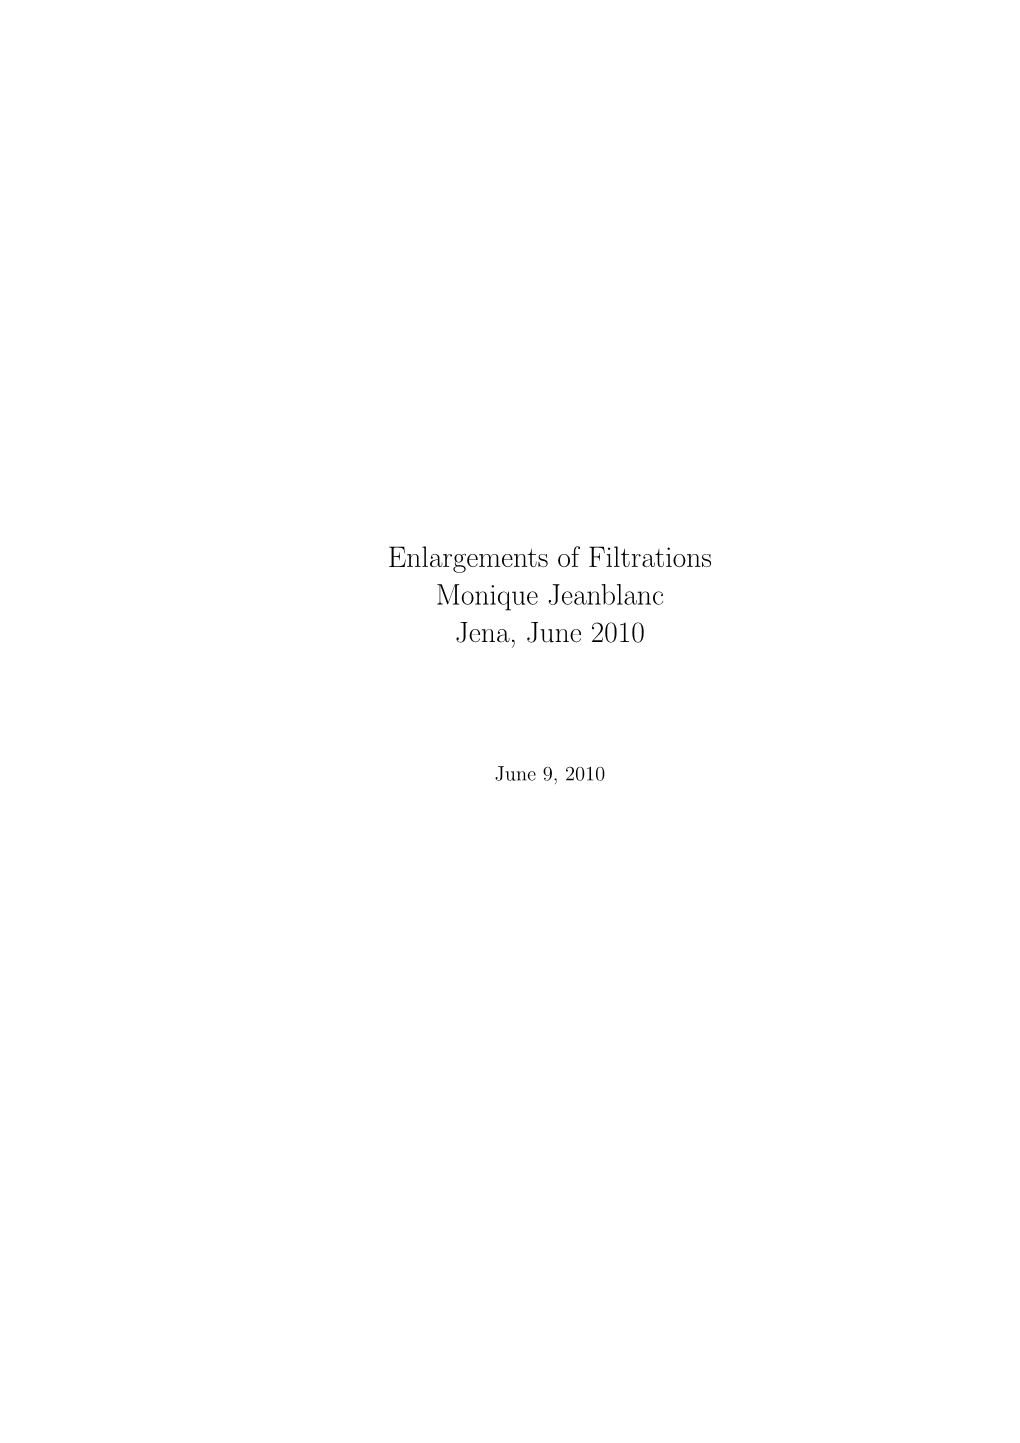 Enlargement of Filtrations